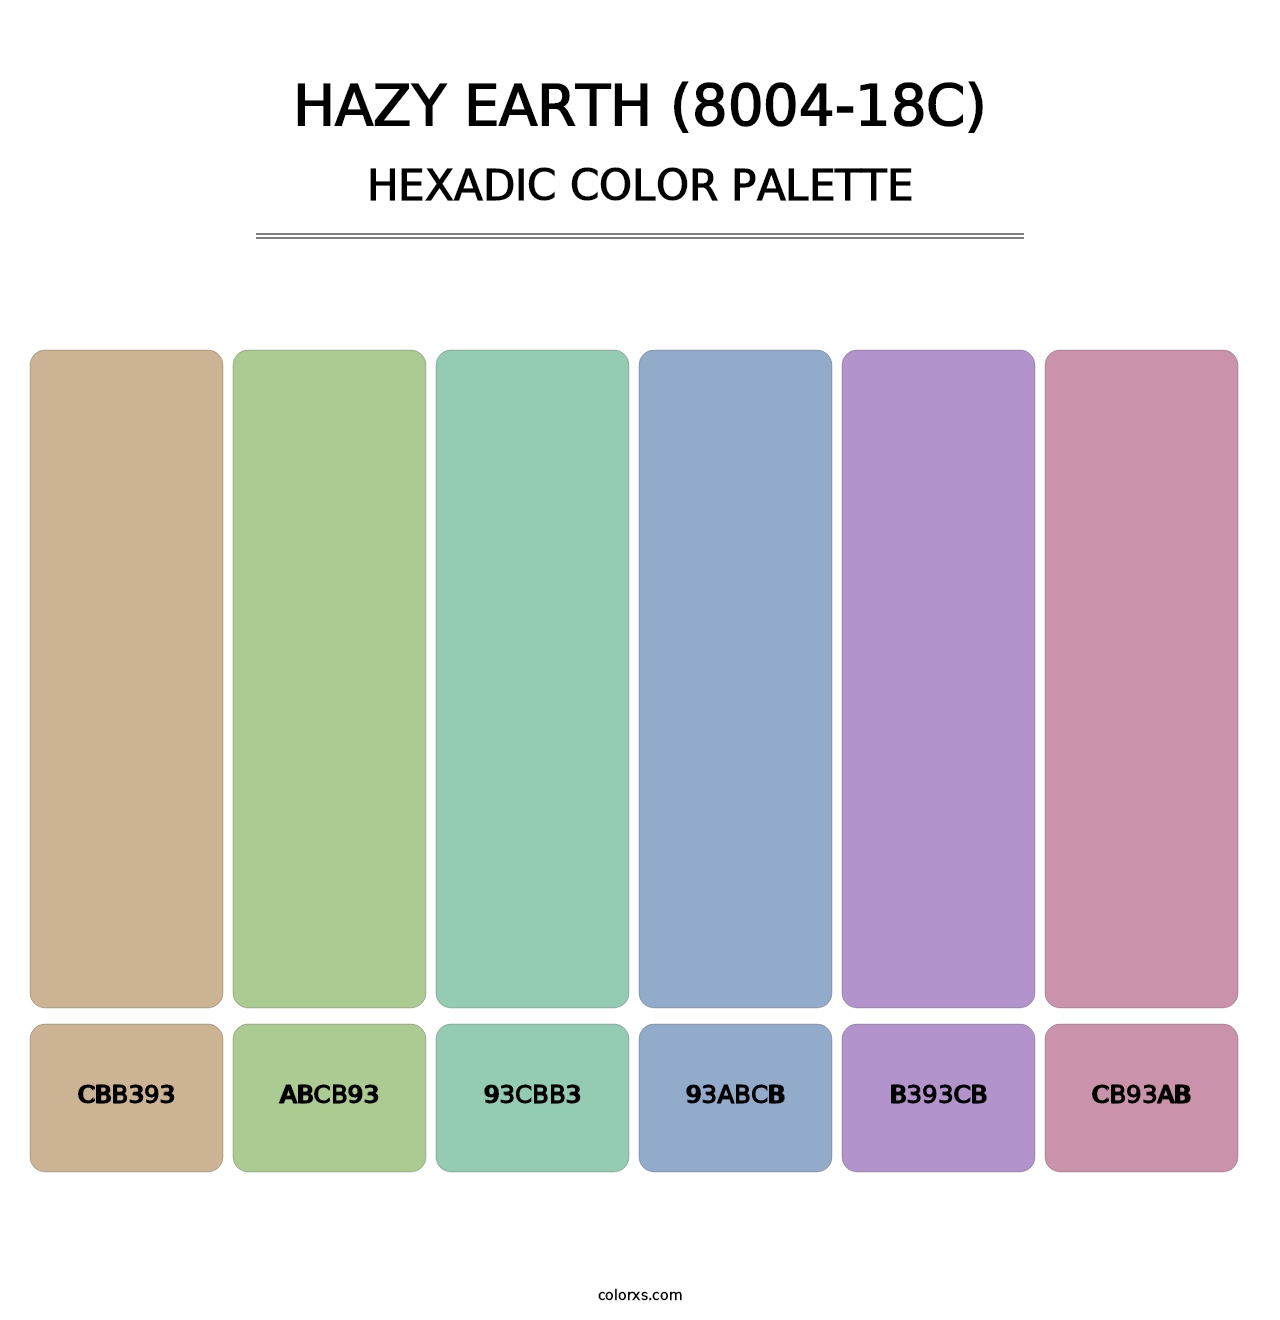 Hazy Earth (8004-18C) - Hexadic Color Palette